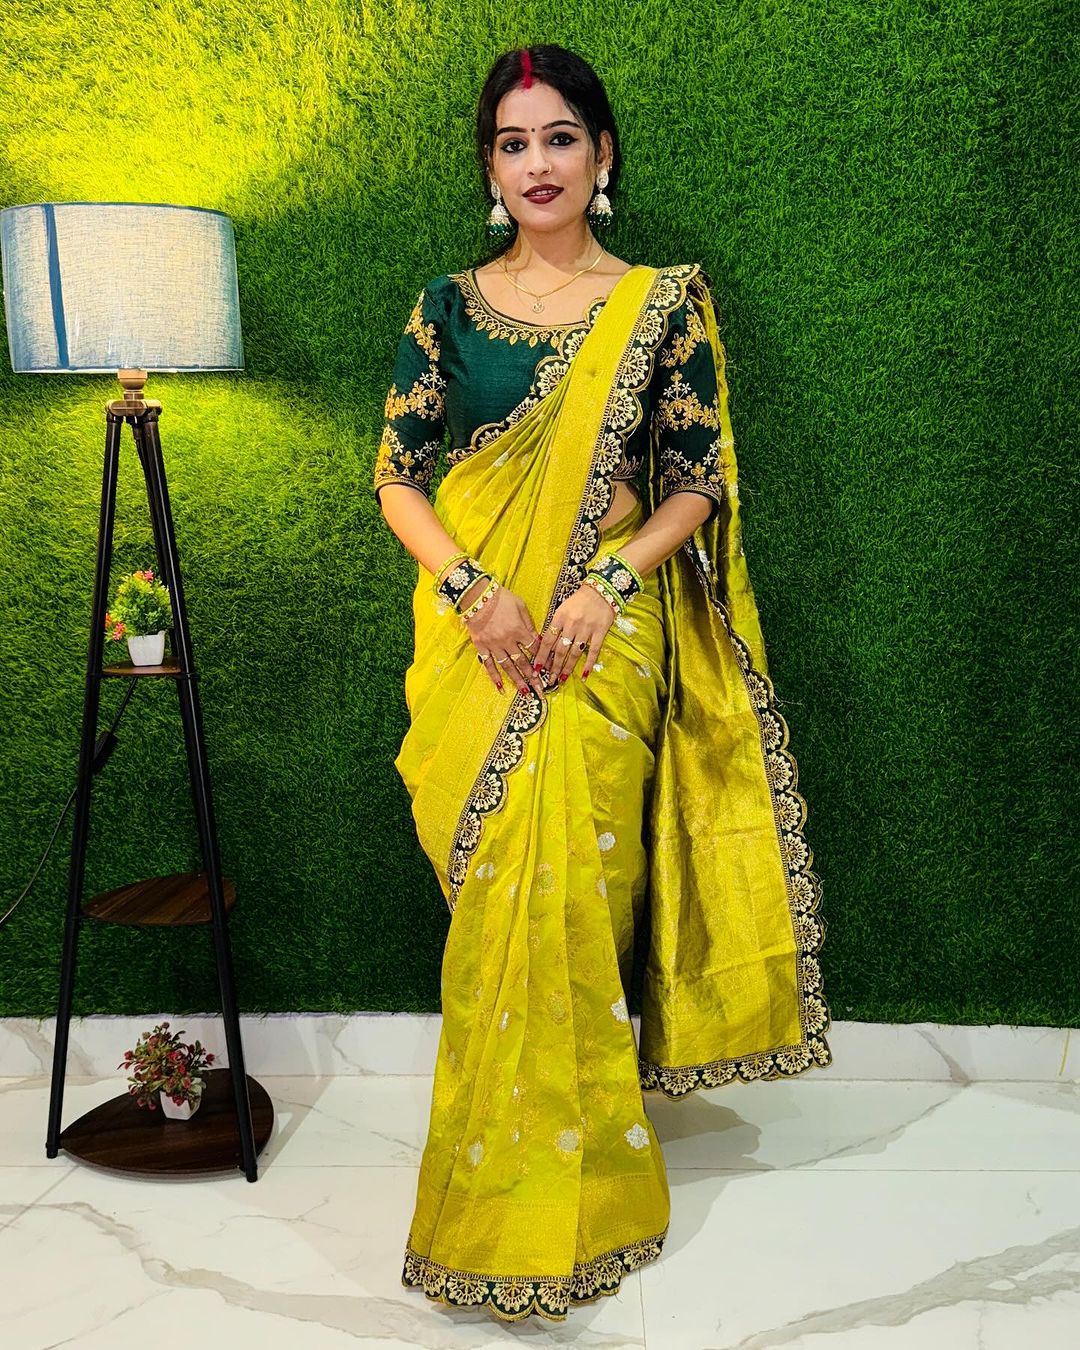 wedding saree with rich emboridery design